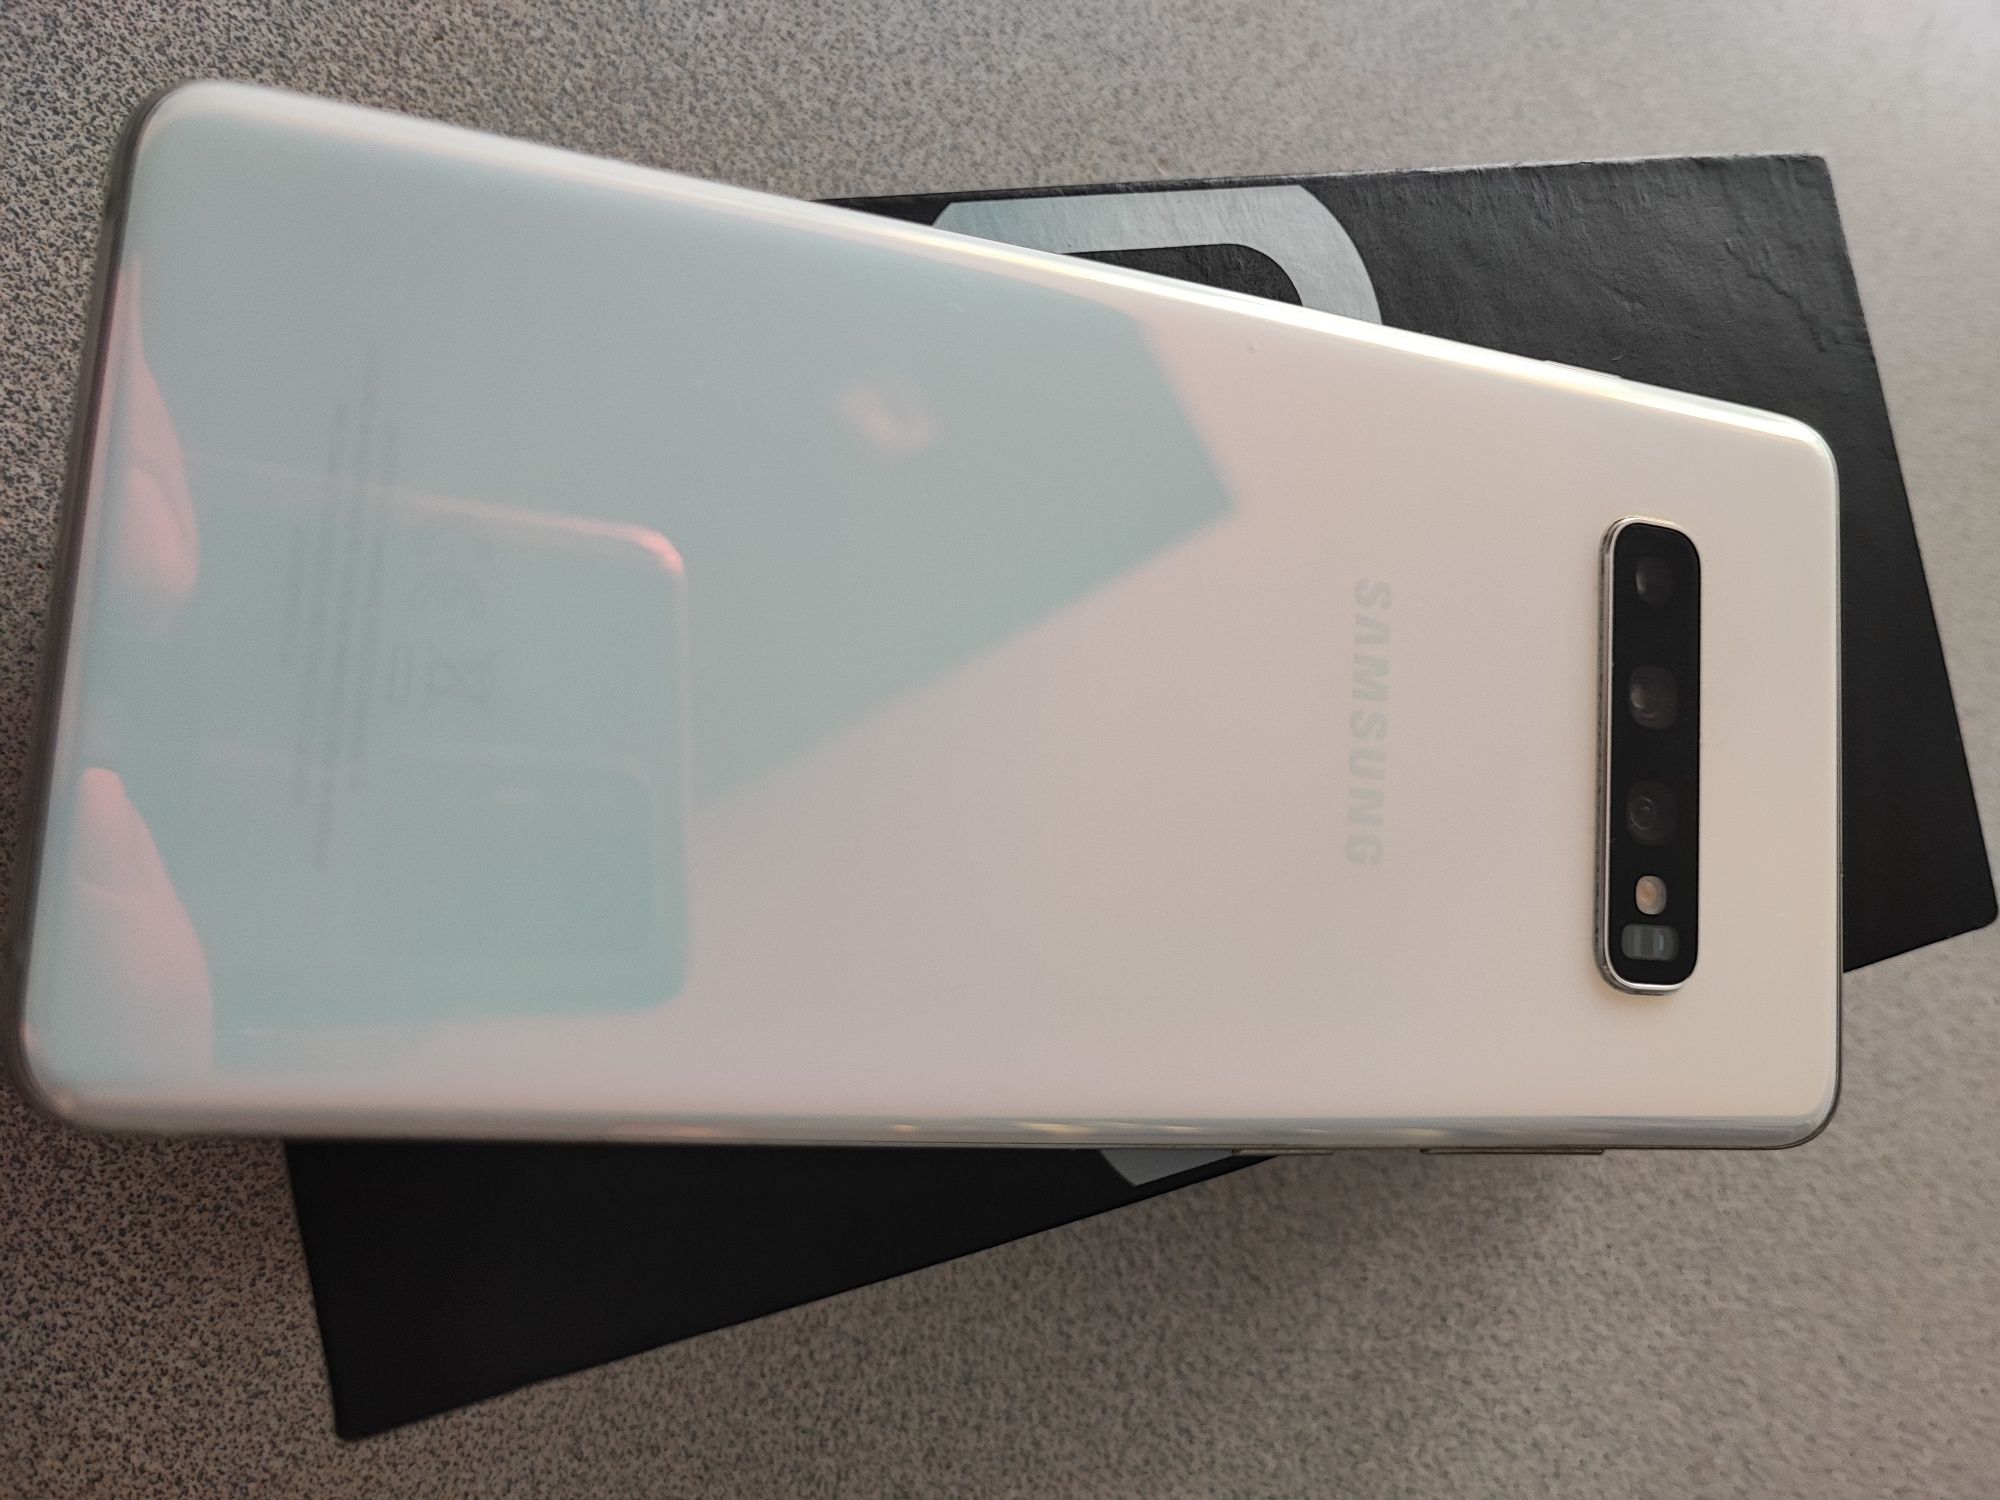 Jak nowy Samsung Galaxy S10 plus,S10+,komplet, 128/8GB